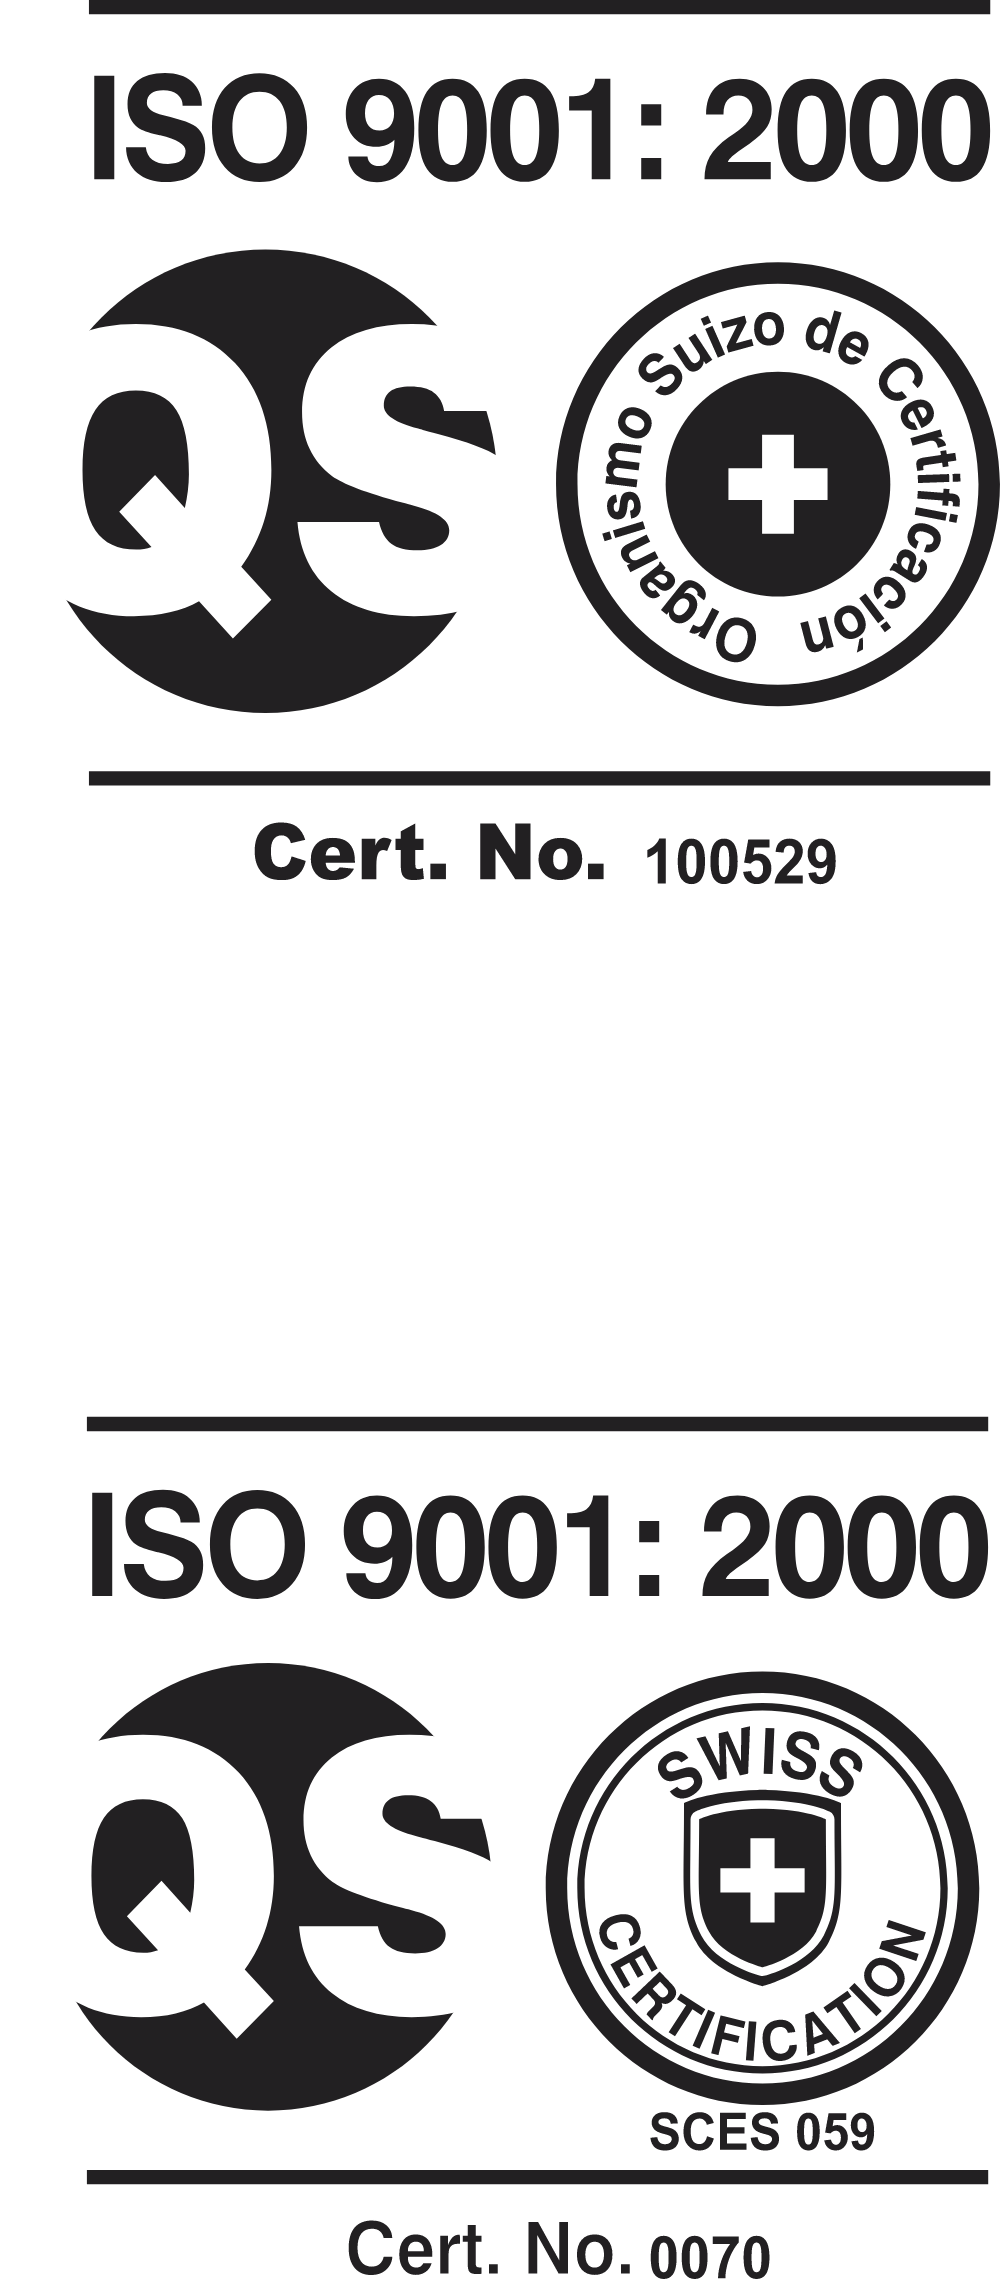 ISO 9001 SWISS Logo Logos